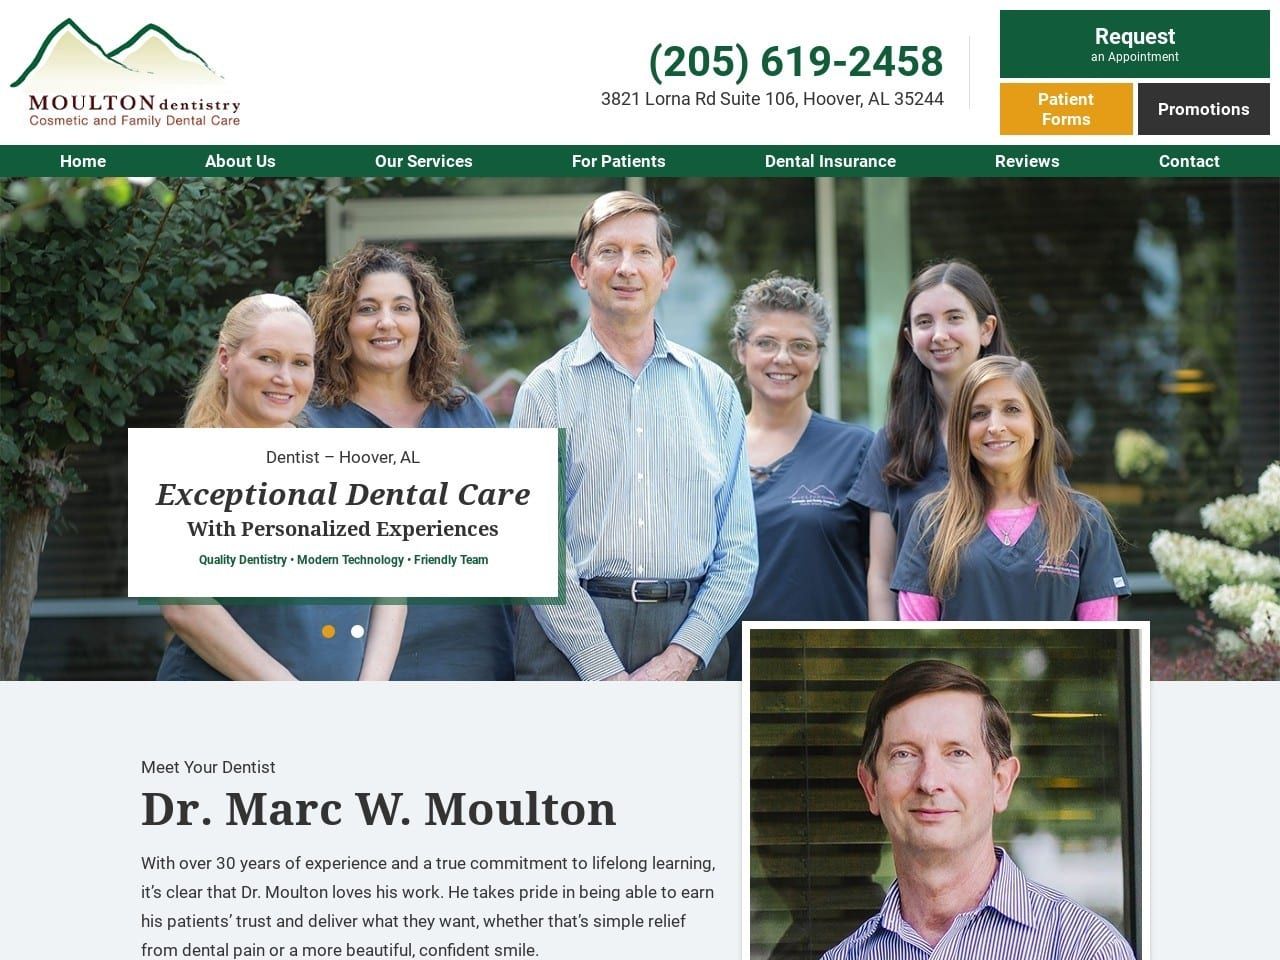 Moulton Dentistry Website Screenshot from moultondentistry.com